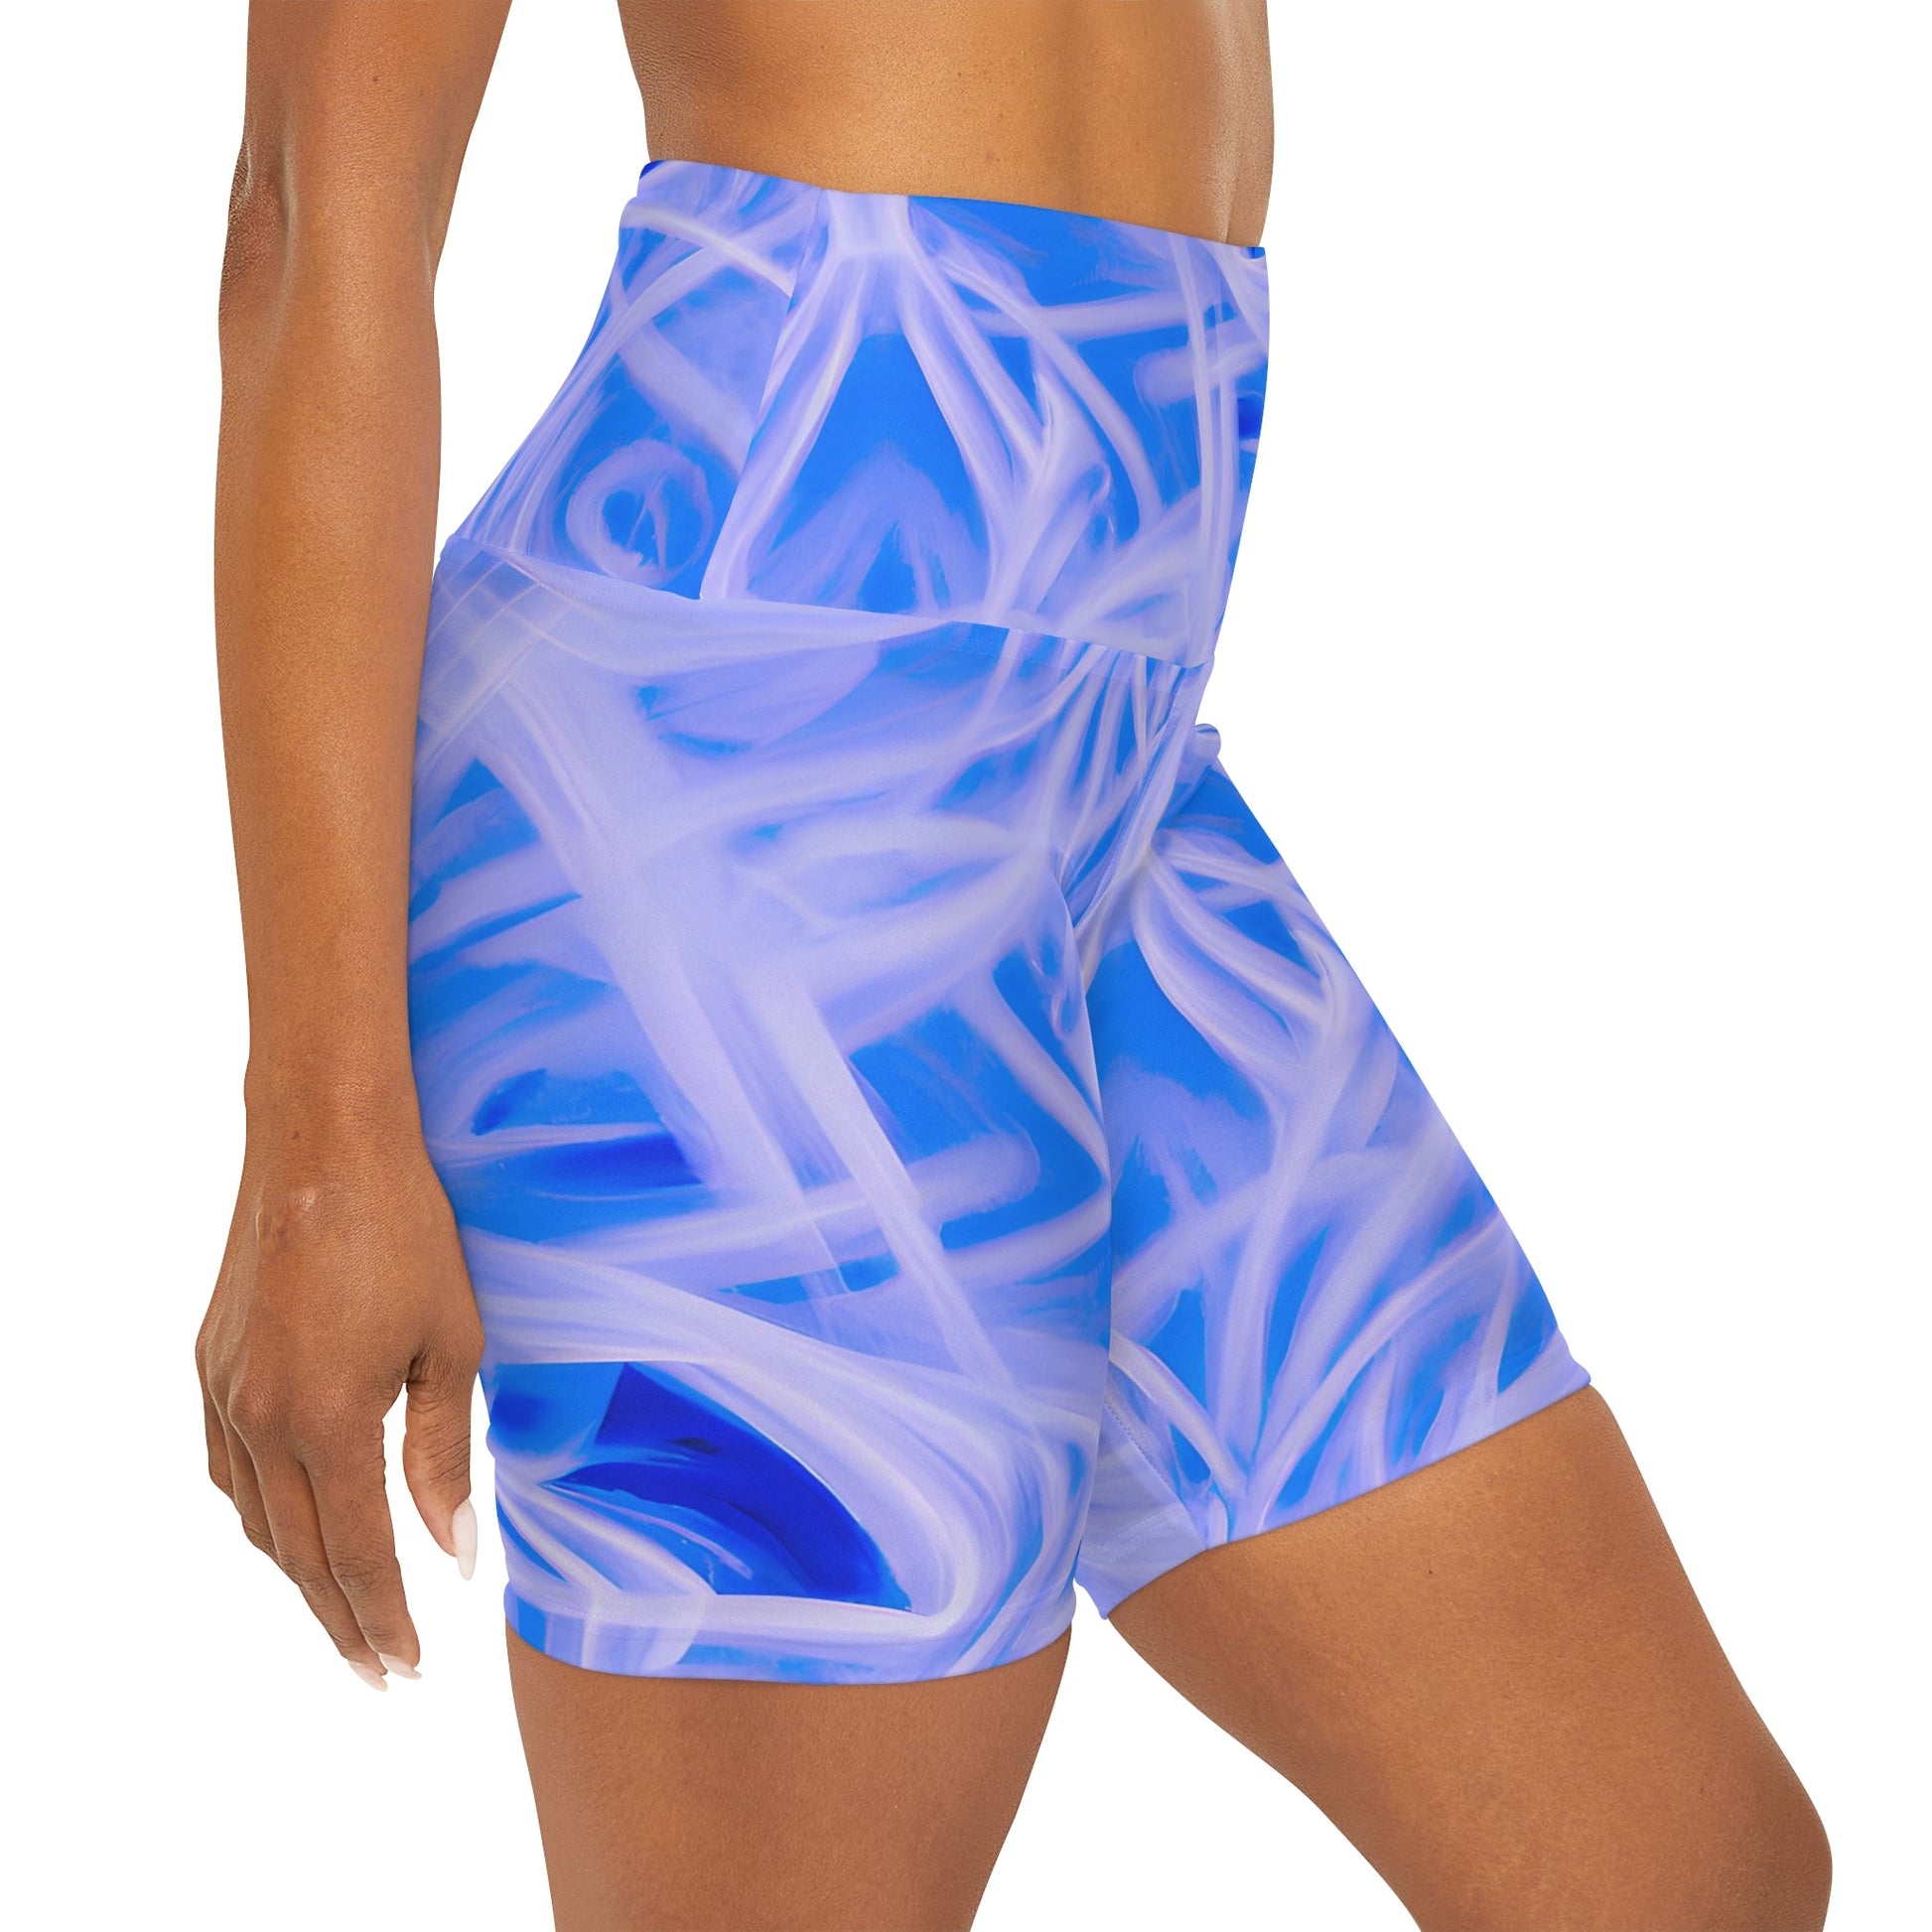 Women's Zephyr Soft Blue Yoga Shorts - Taigora